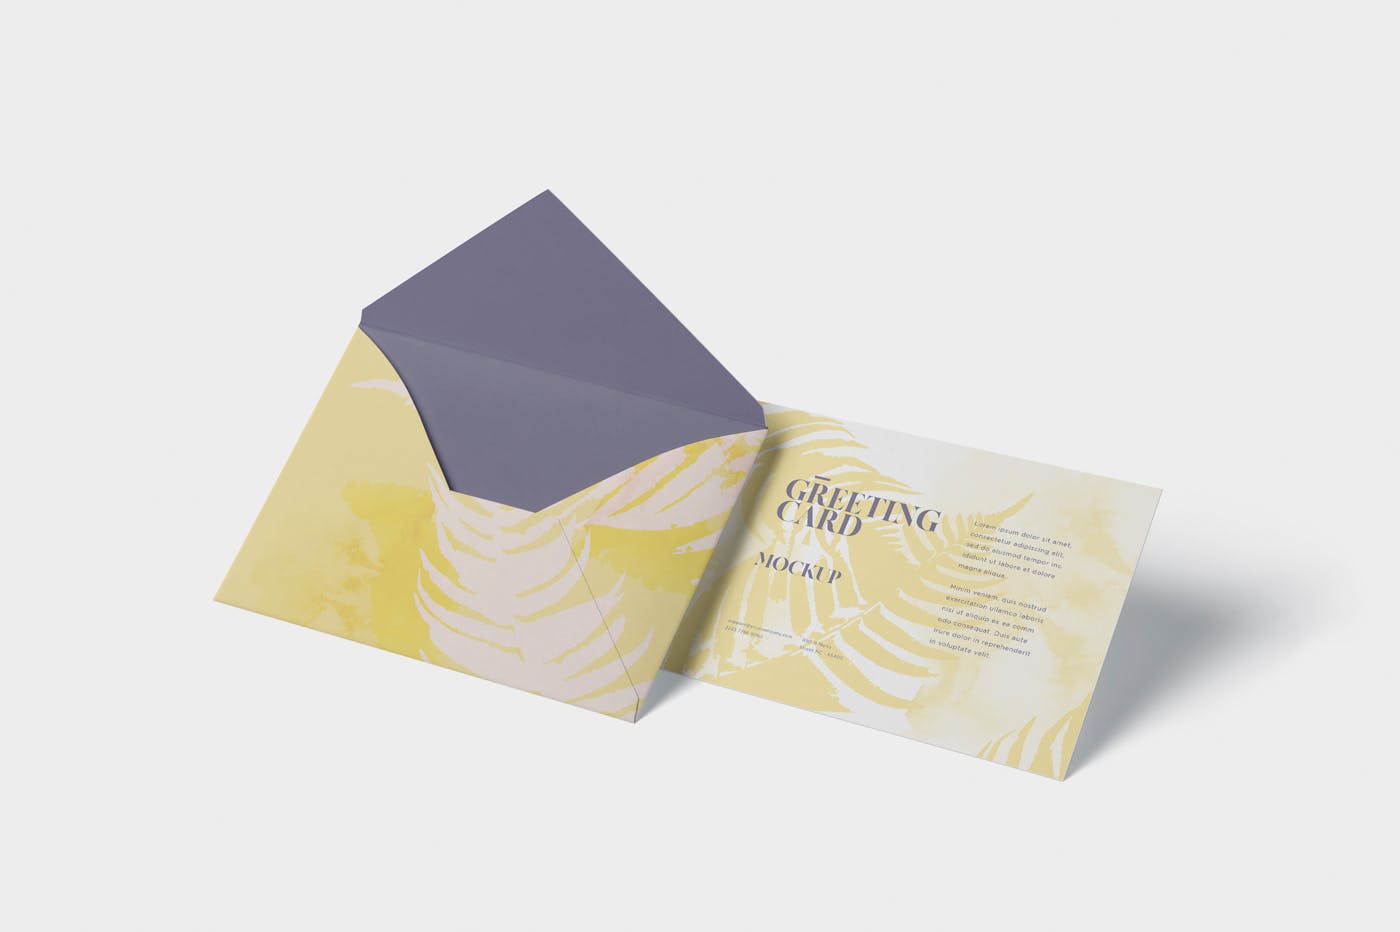 高端企业信封&贺卡设计图素材库精选 Greeting Card Mockup with Envelope – A6 Size插图(2)